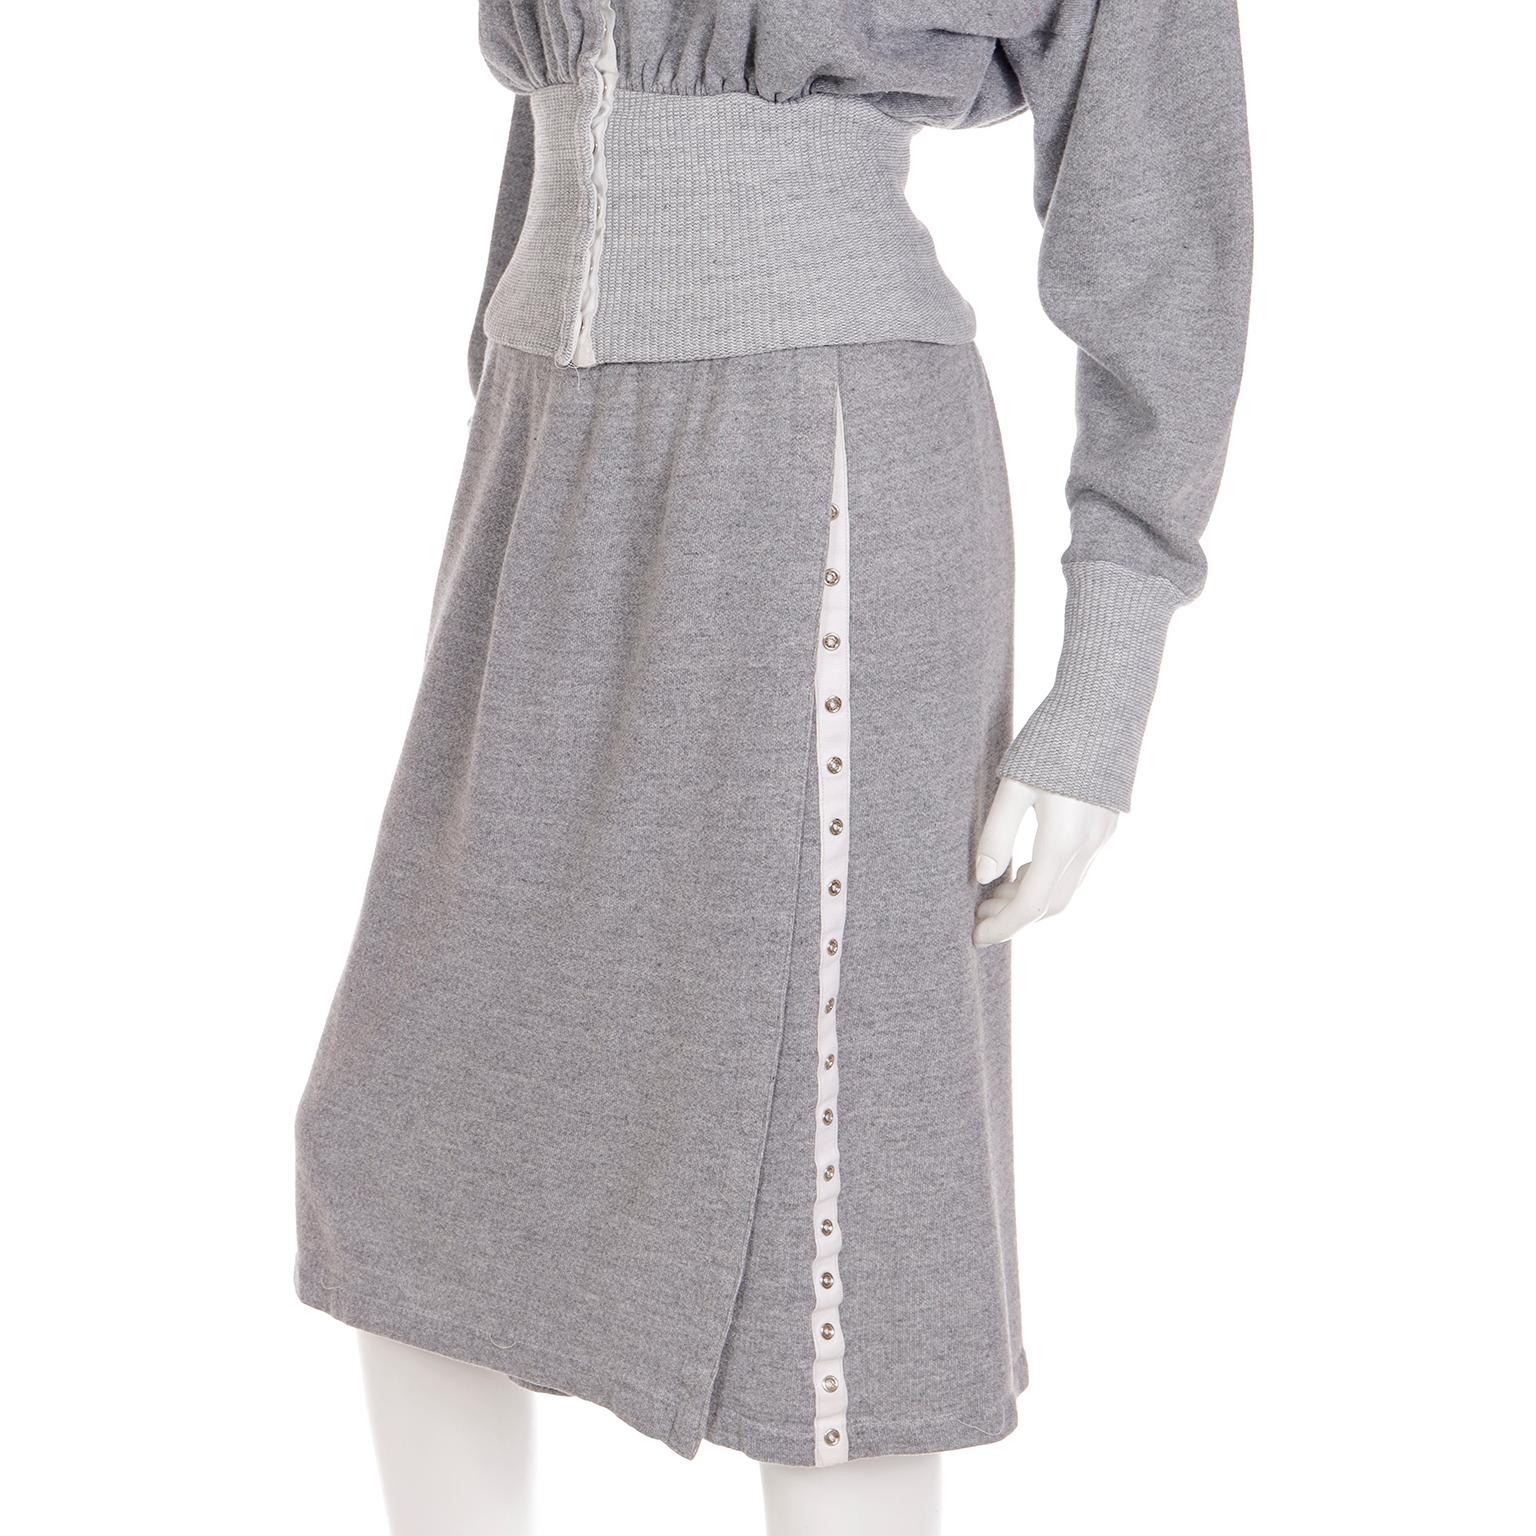 Norma Kamali 1980 Sweats Grey Sweatshirt 2 pc Dress w Snap Front Top & Skirt For Sale 4